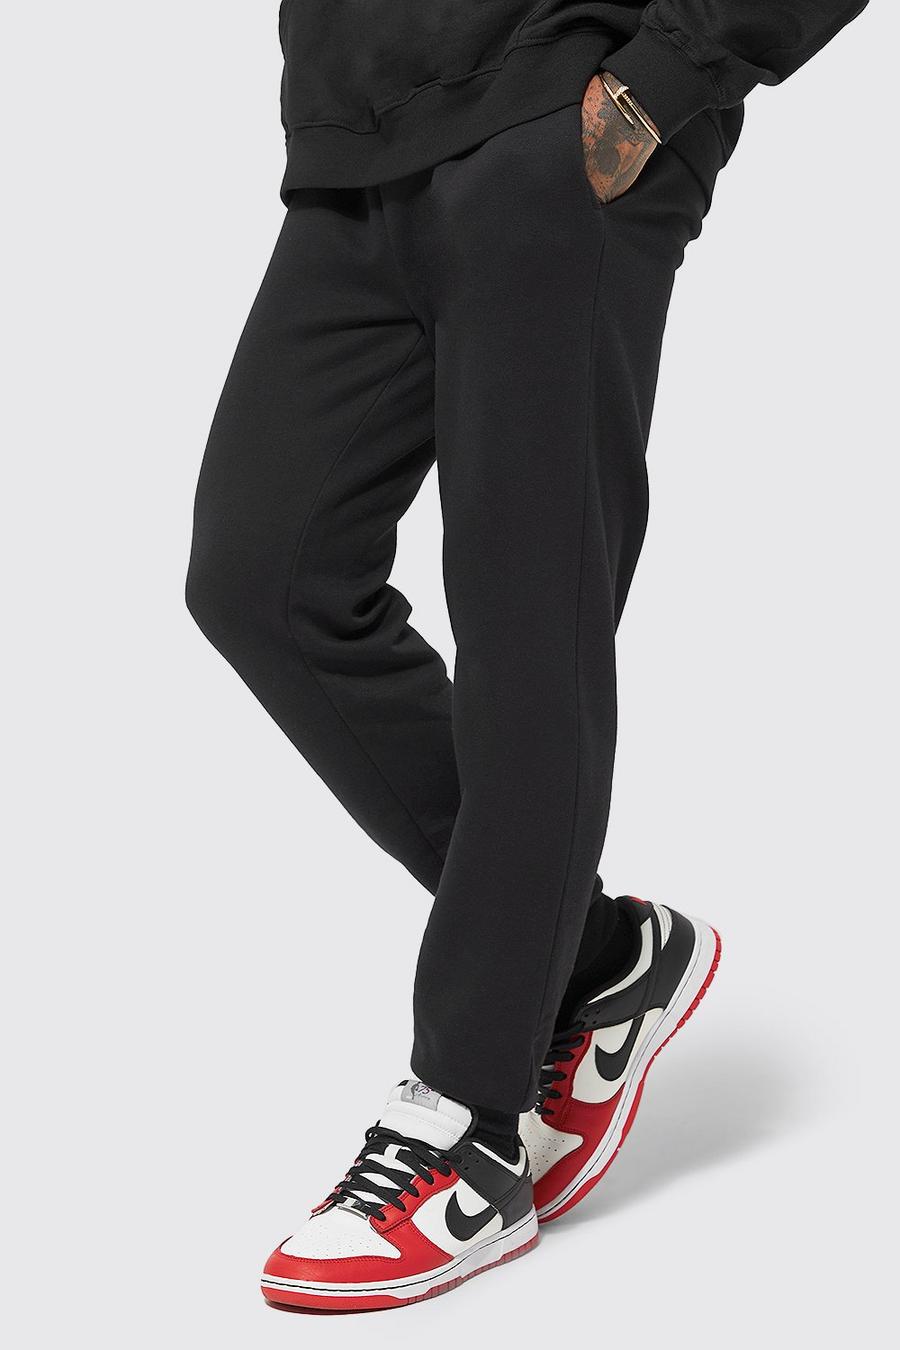 Black מכנסי ריצה בגזרה רגילה מבד משולב בכותנת REEL